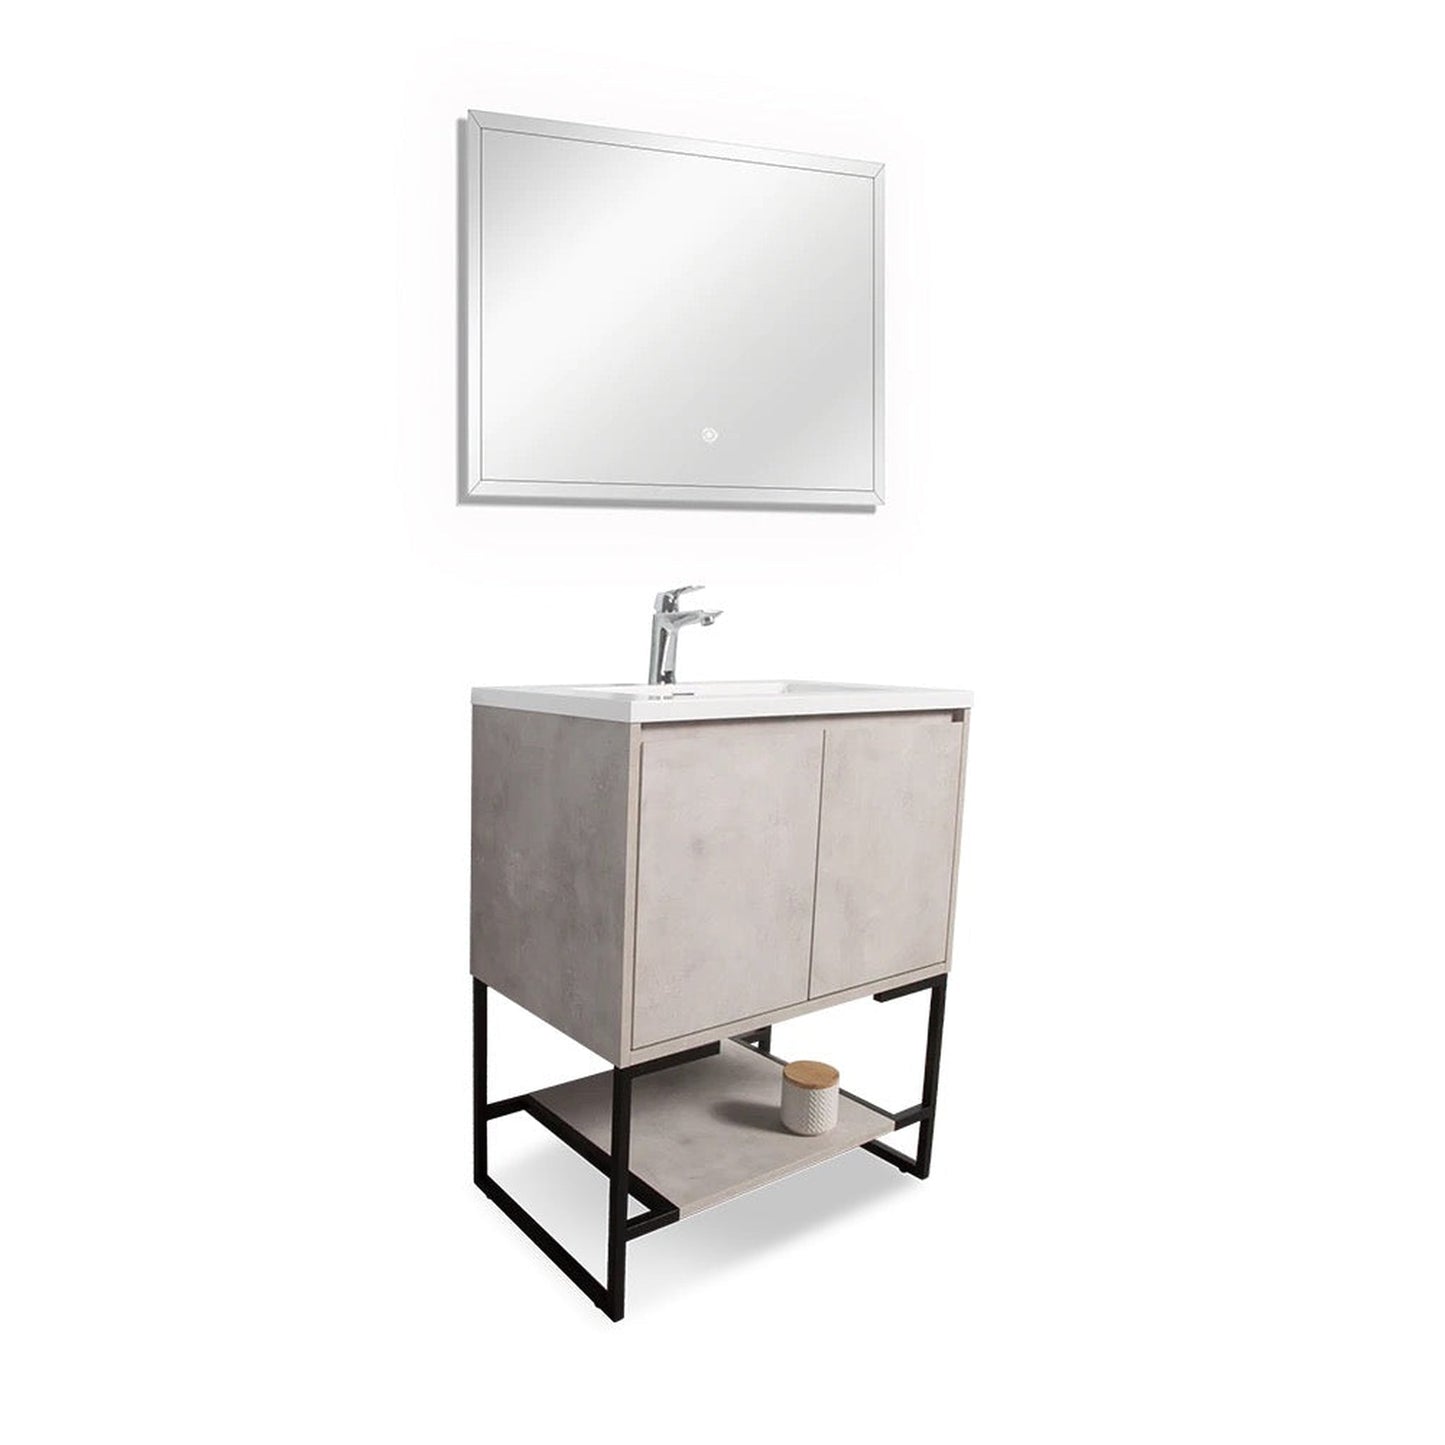 TONA Allen 24" Light Gray & White Freestanding Bathroom Vanity with Integrated Top and Sink